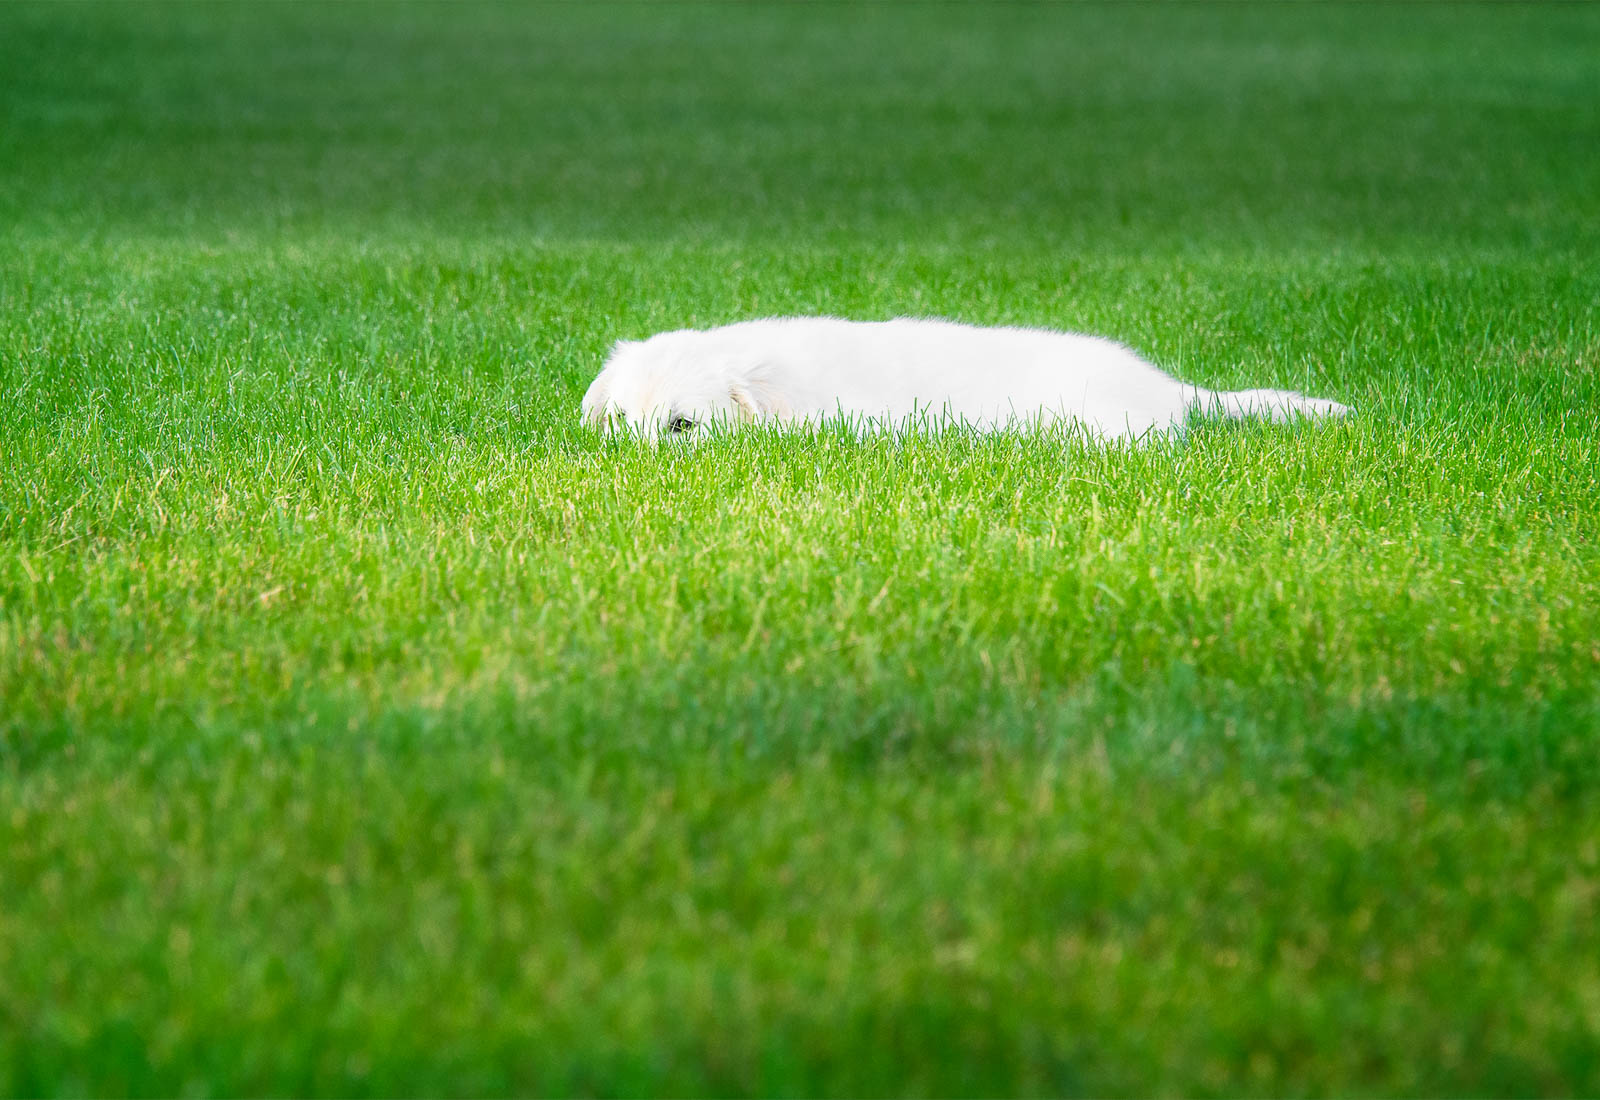 Golden Retriever puppy hiding in the grass